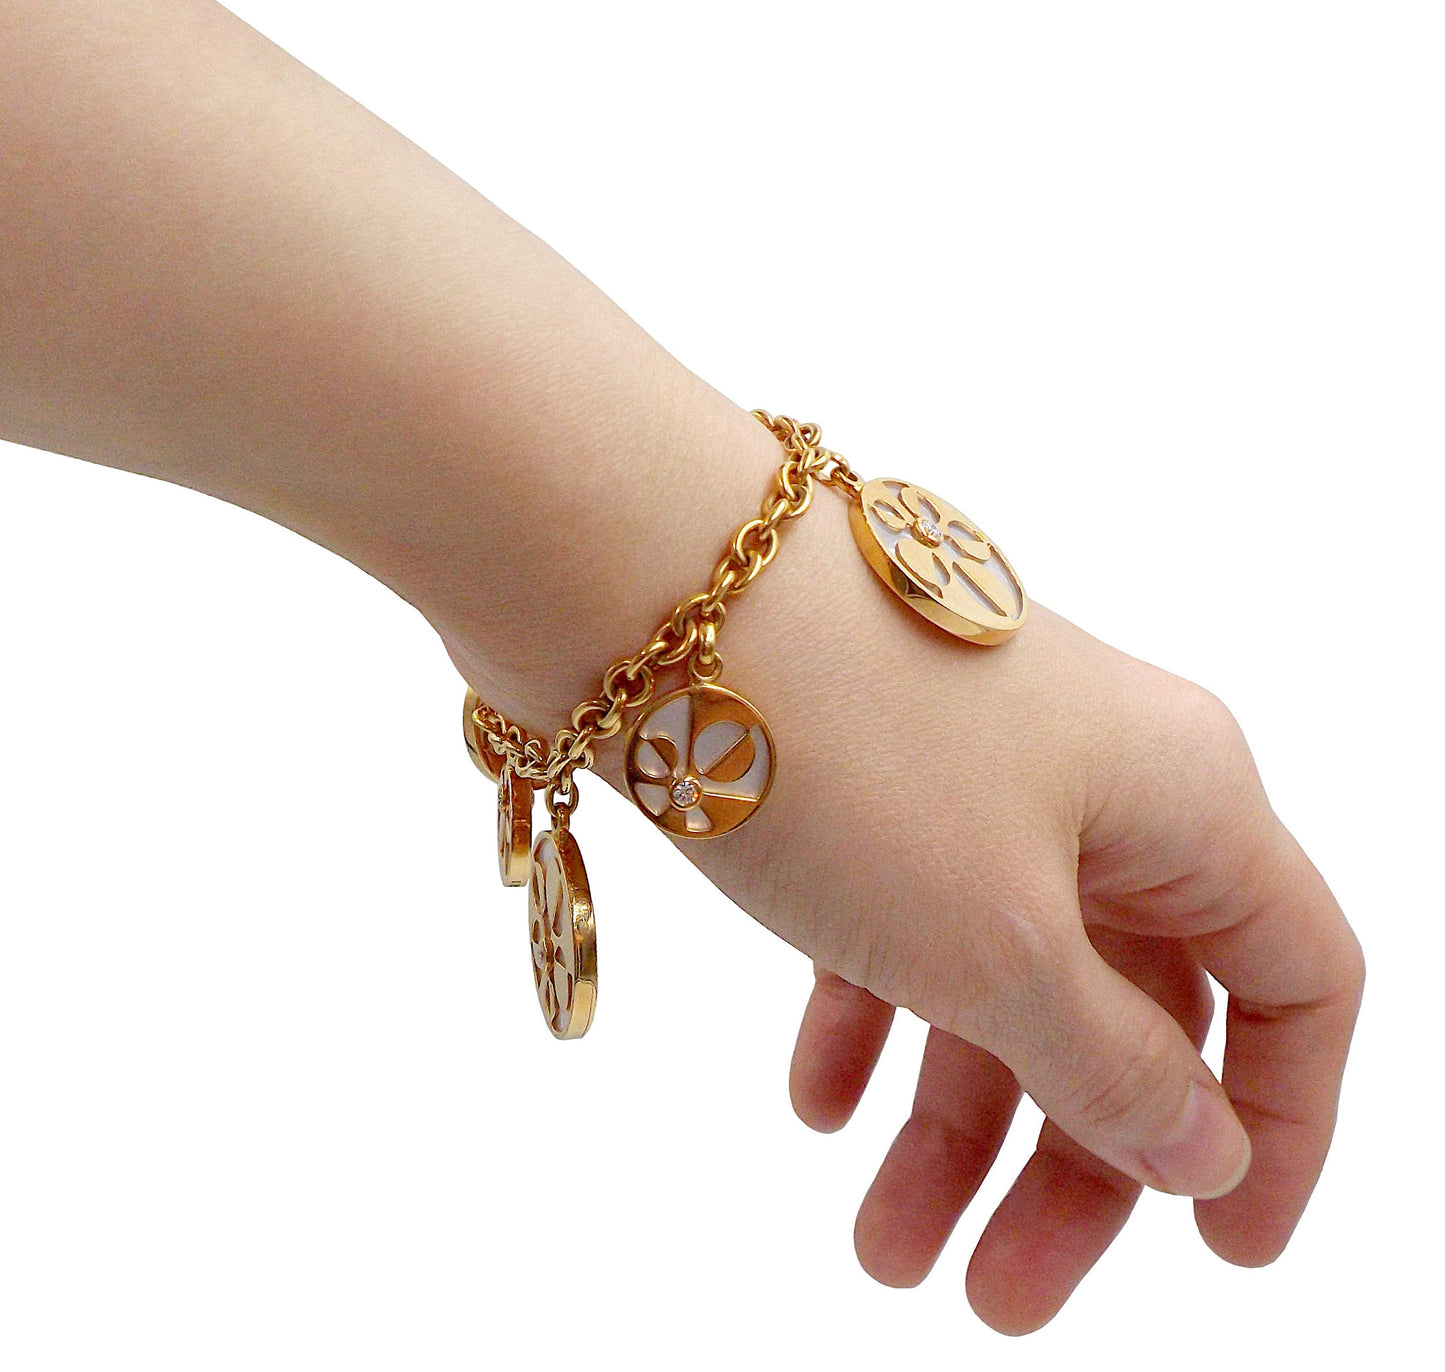 Bulgari Intarsio 18K Rose Gold Diamond Mother of Pearl Charm Bracelet